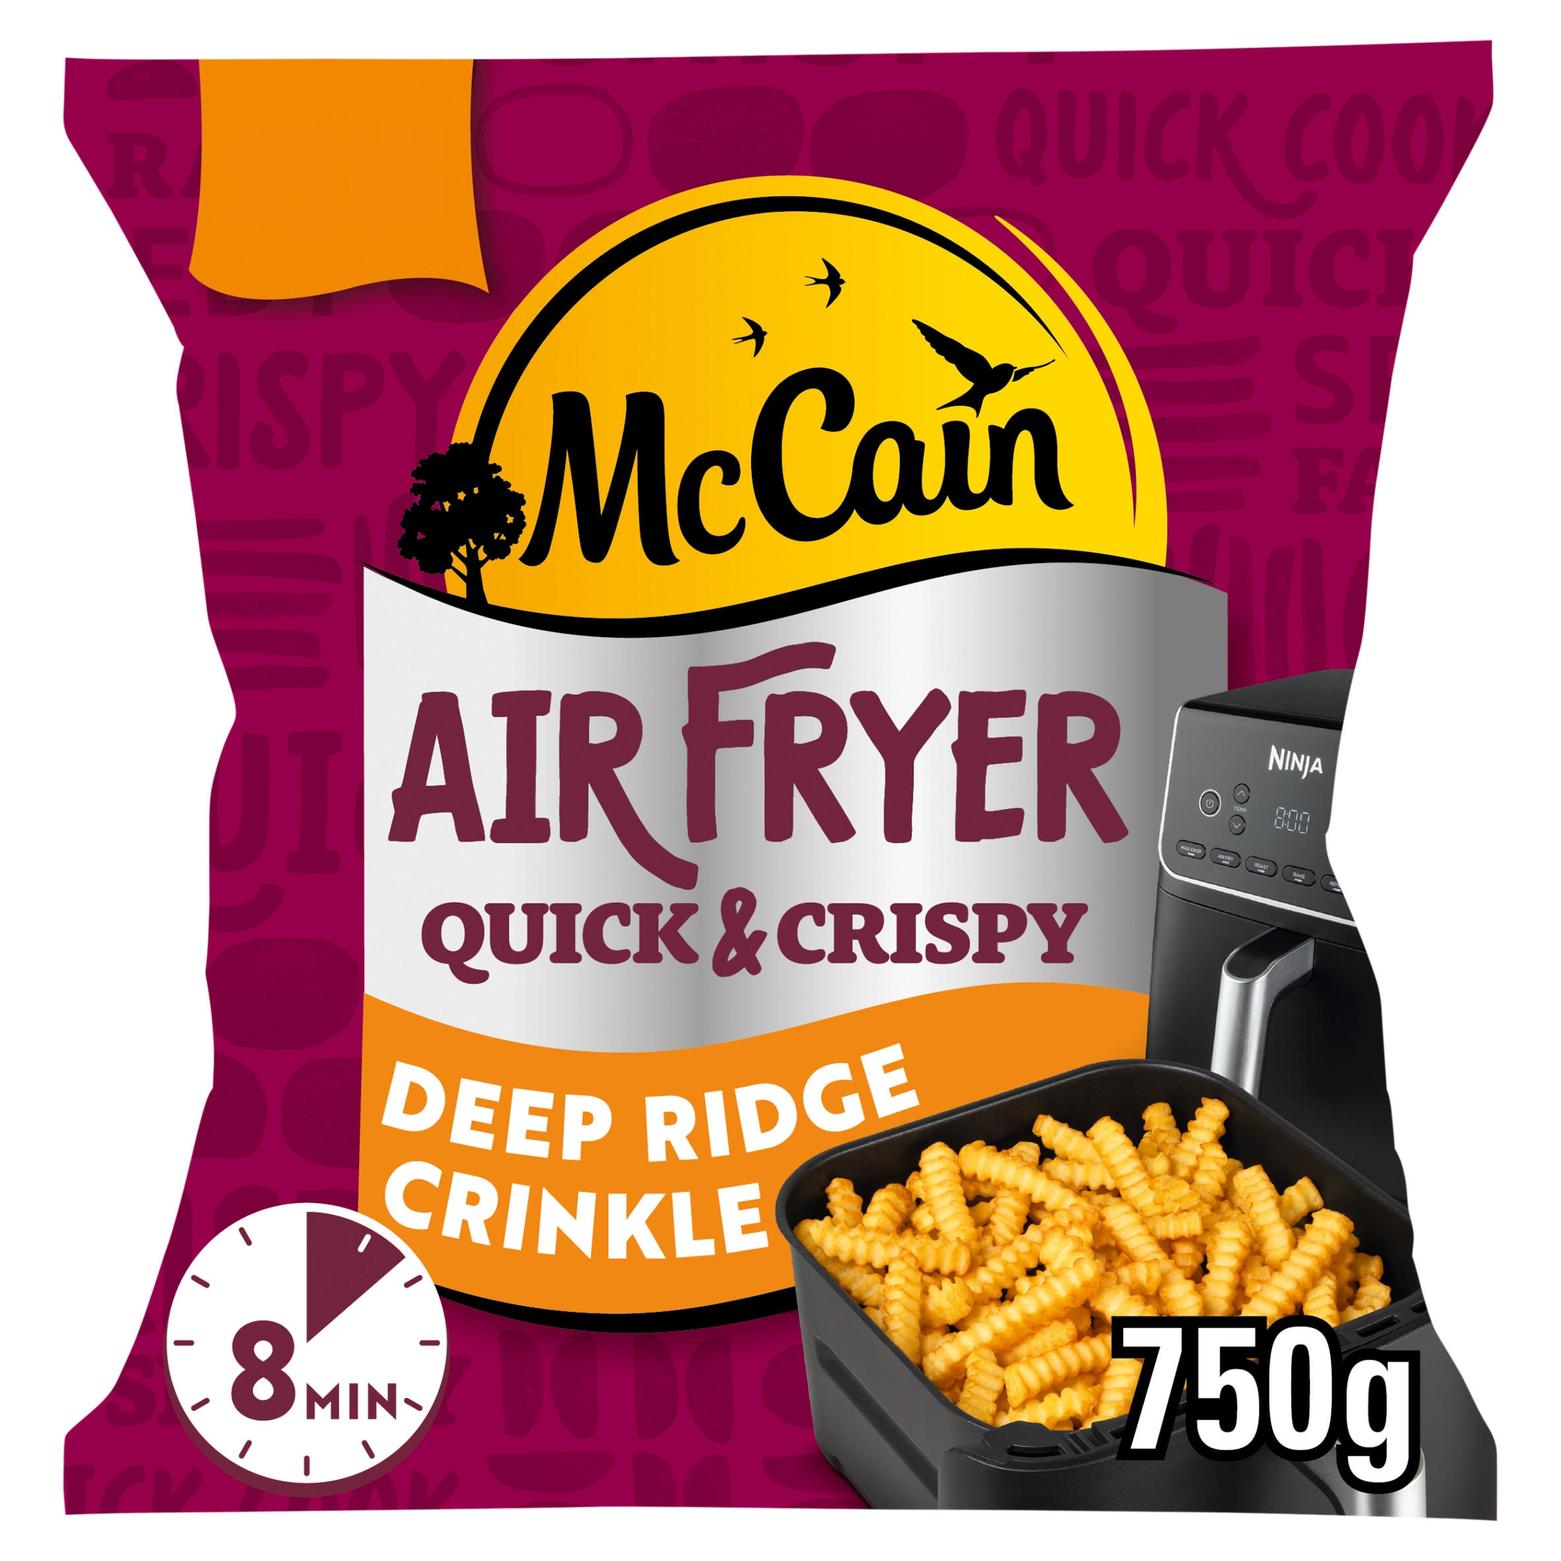 McCain Air Fryer Deep Ridge Crinkle Fries 750g offers at £3.75 in Iceland